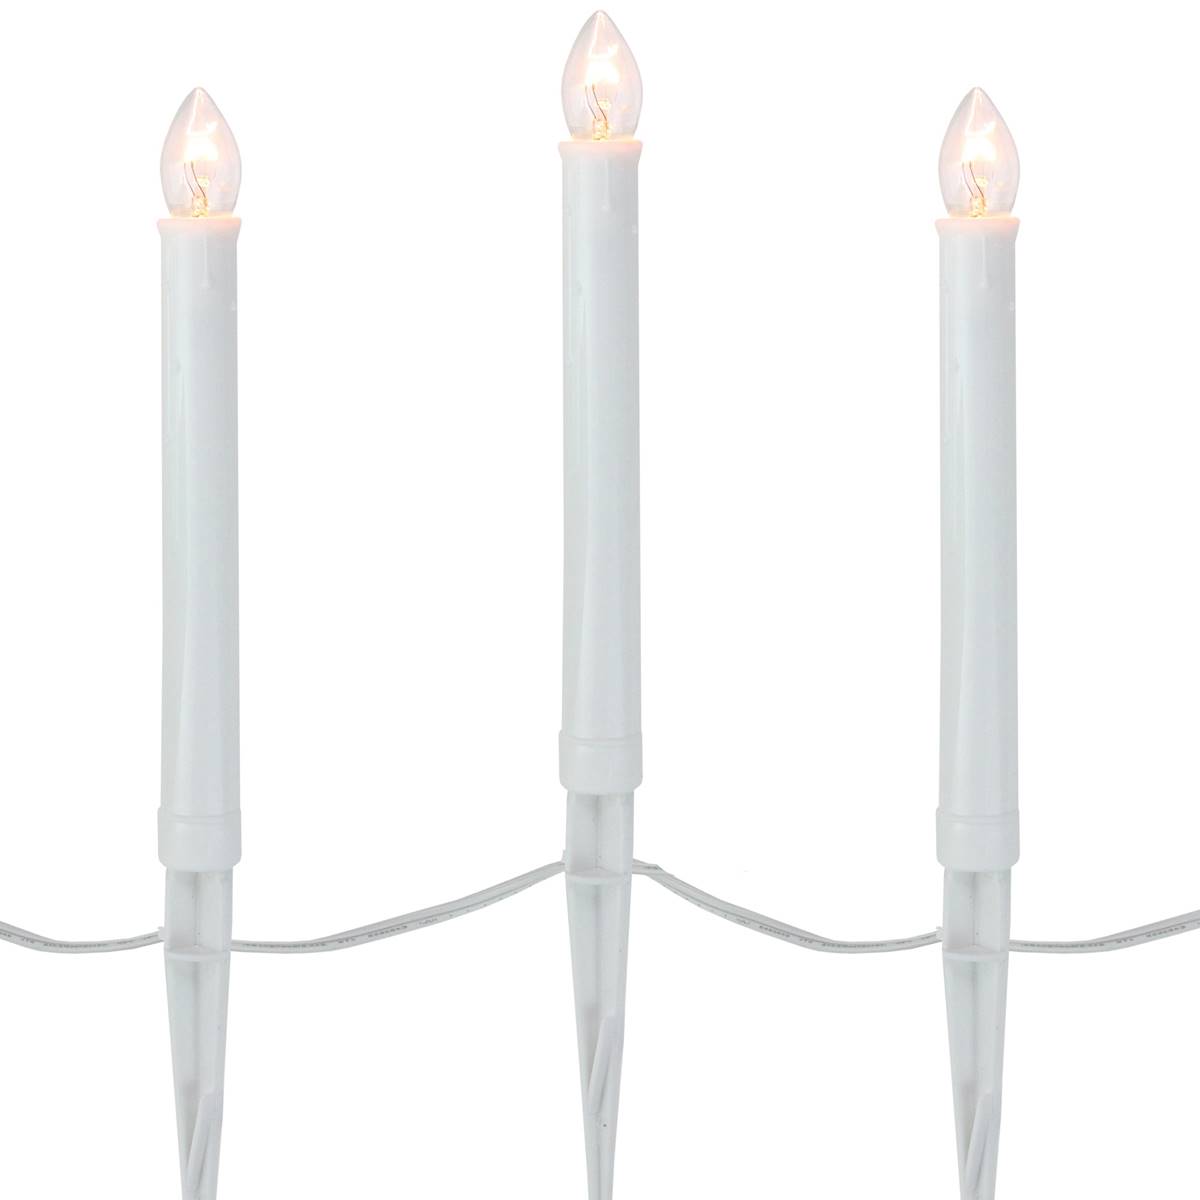 Northlight Seasonal Set Of 10 Candle Christmas Pathway Markers